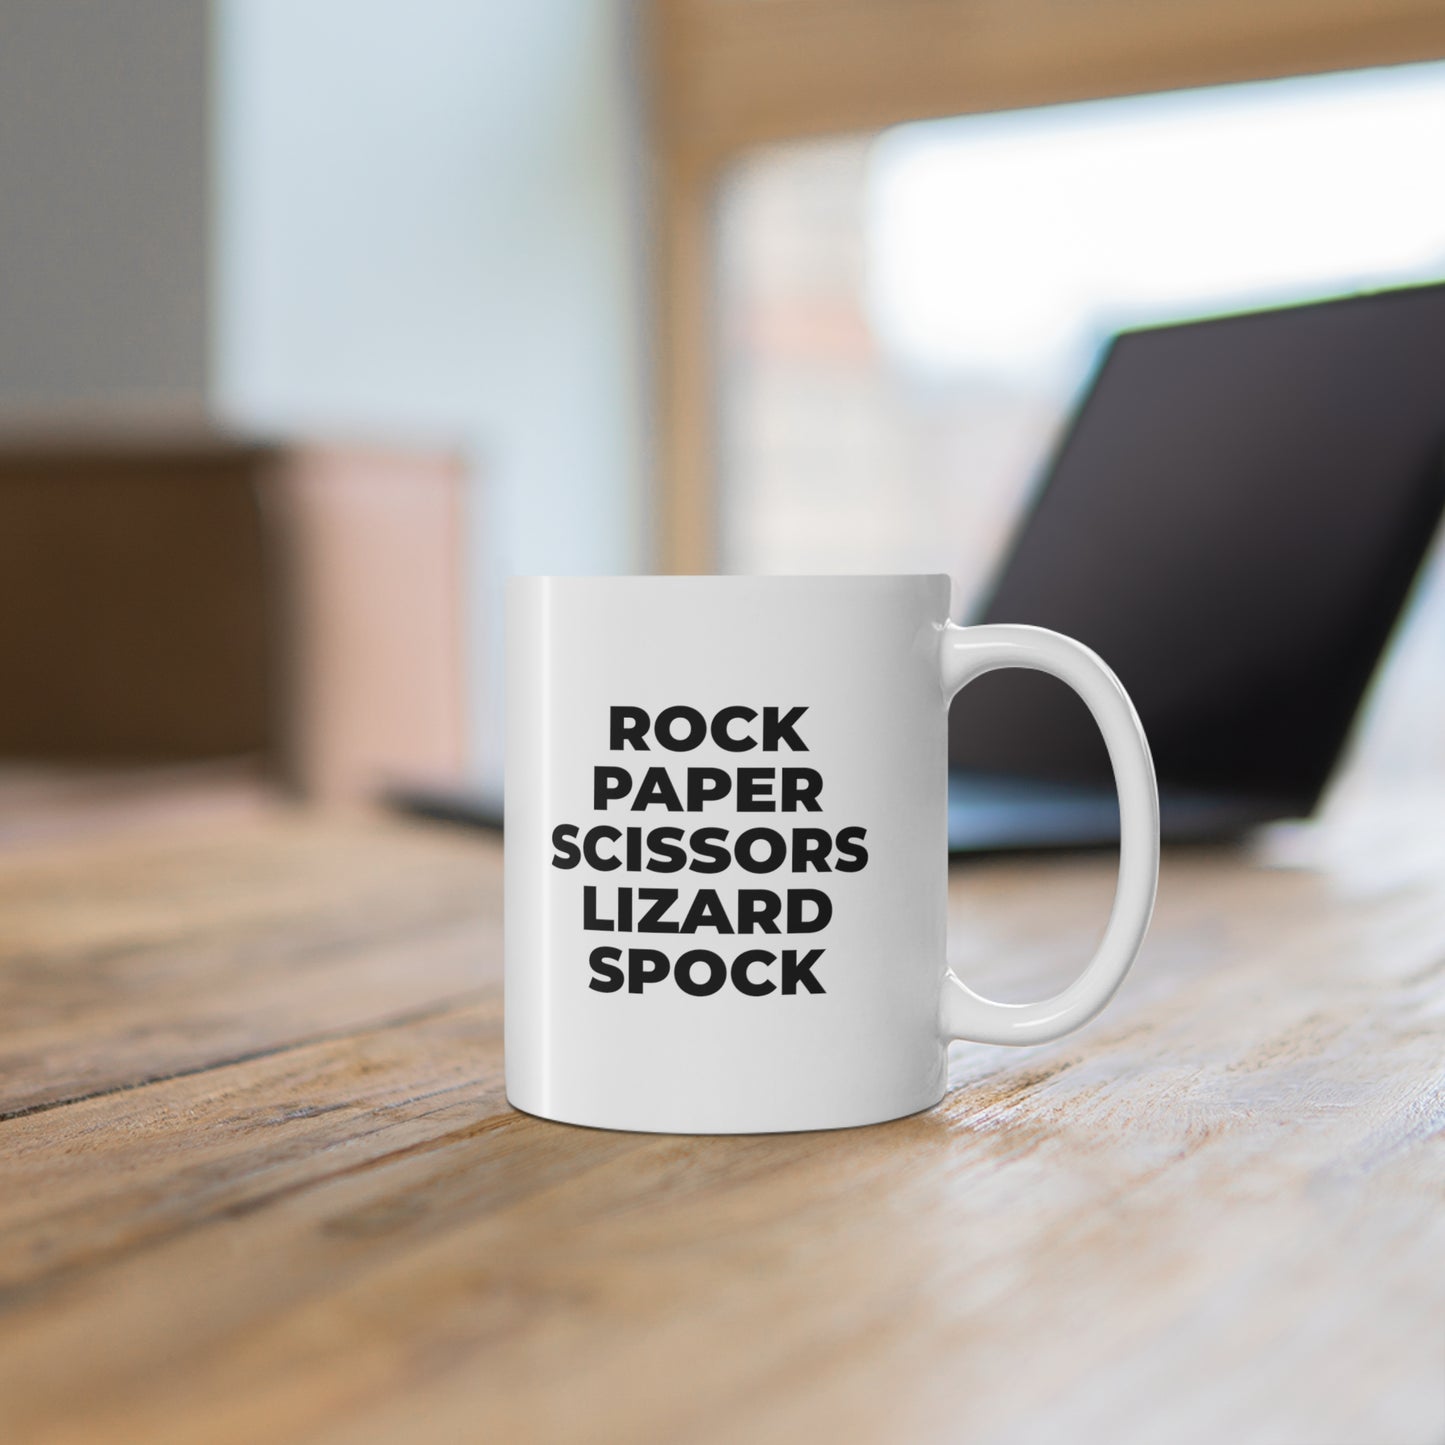 11oz ceramic mug with quote Rock Paper Scissors Lizard Spock